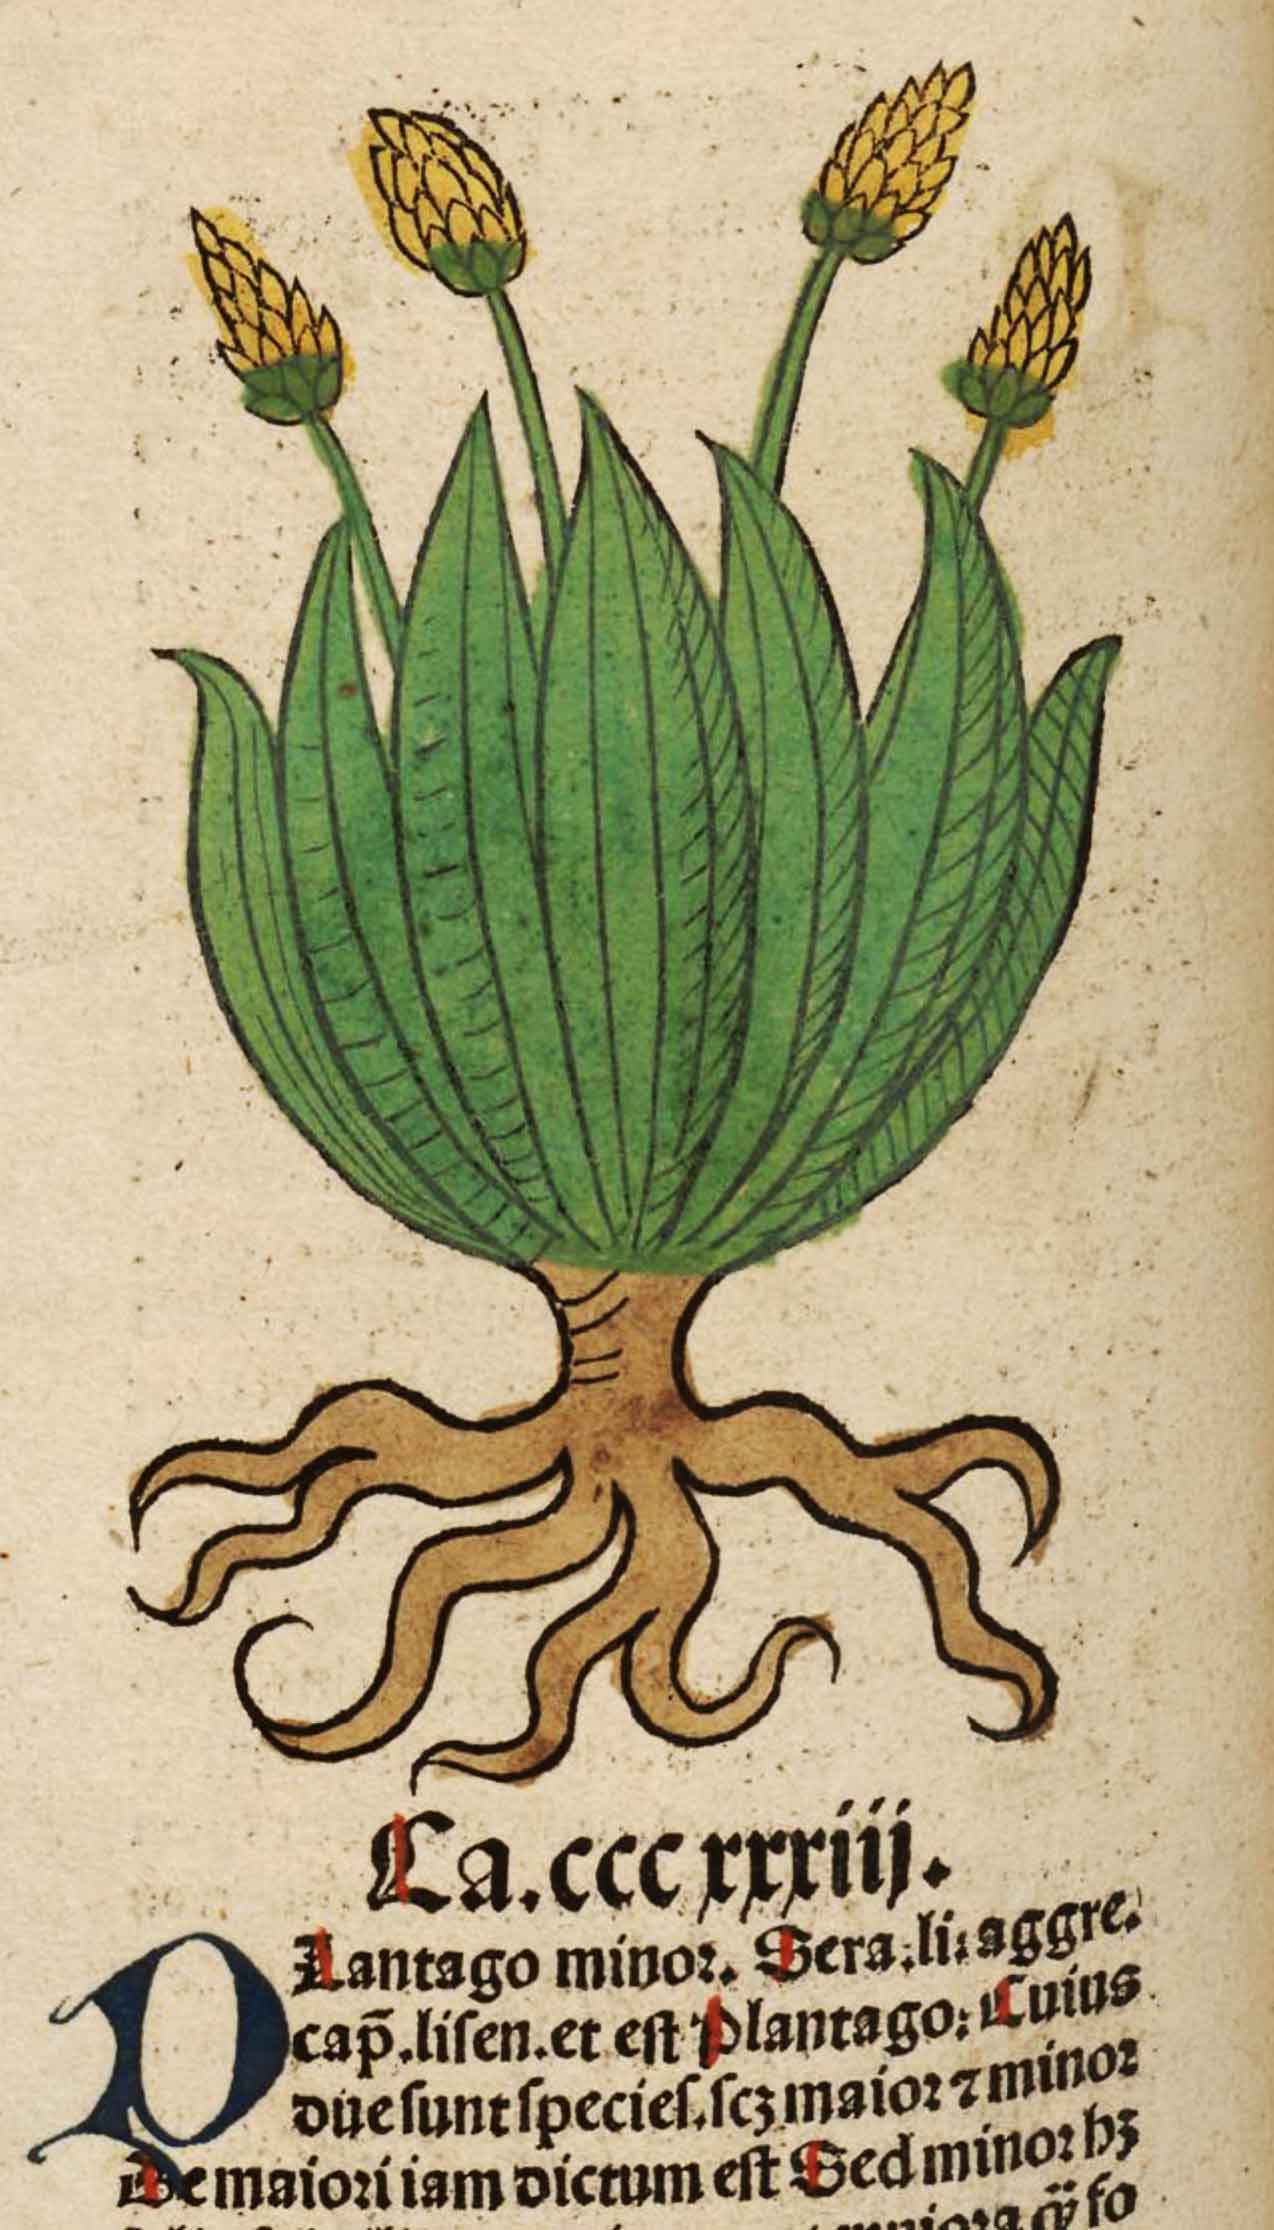 Plantago. Meydenbach, Ortus Sanitatis (1491).